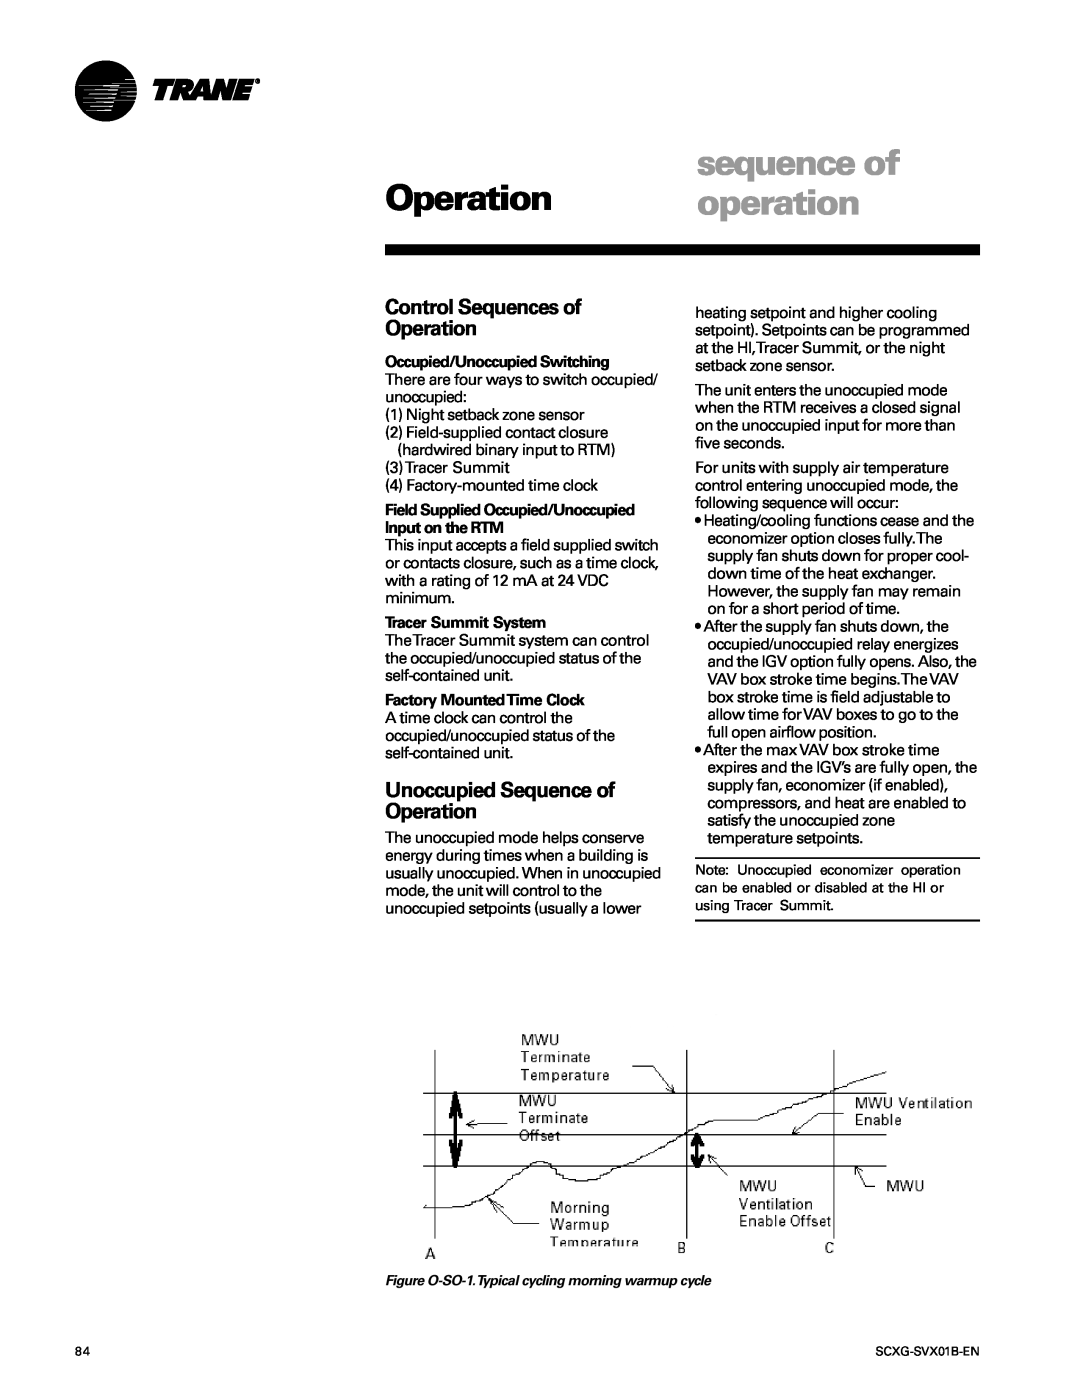 Trane SCXG-SVX01B-EN sequence of, Operation operation, Control Sequences of Operation, Unoccupied Sequence of Operation 